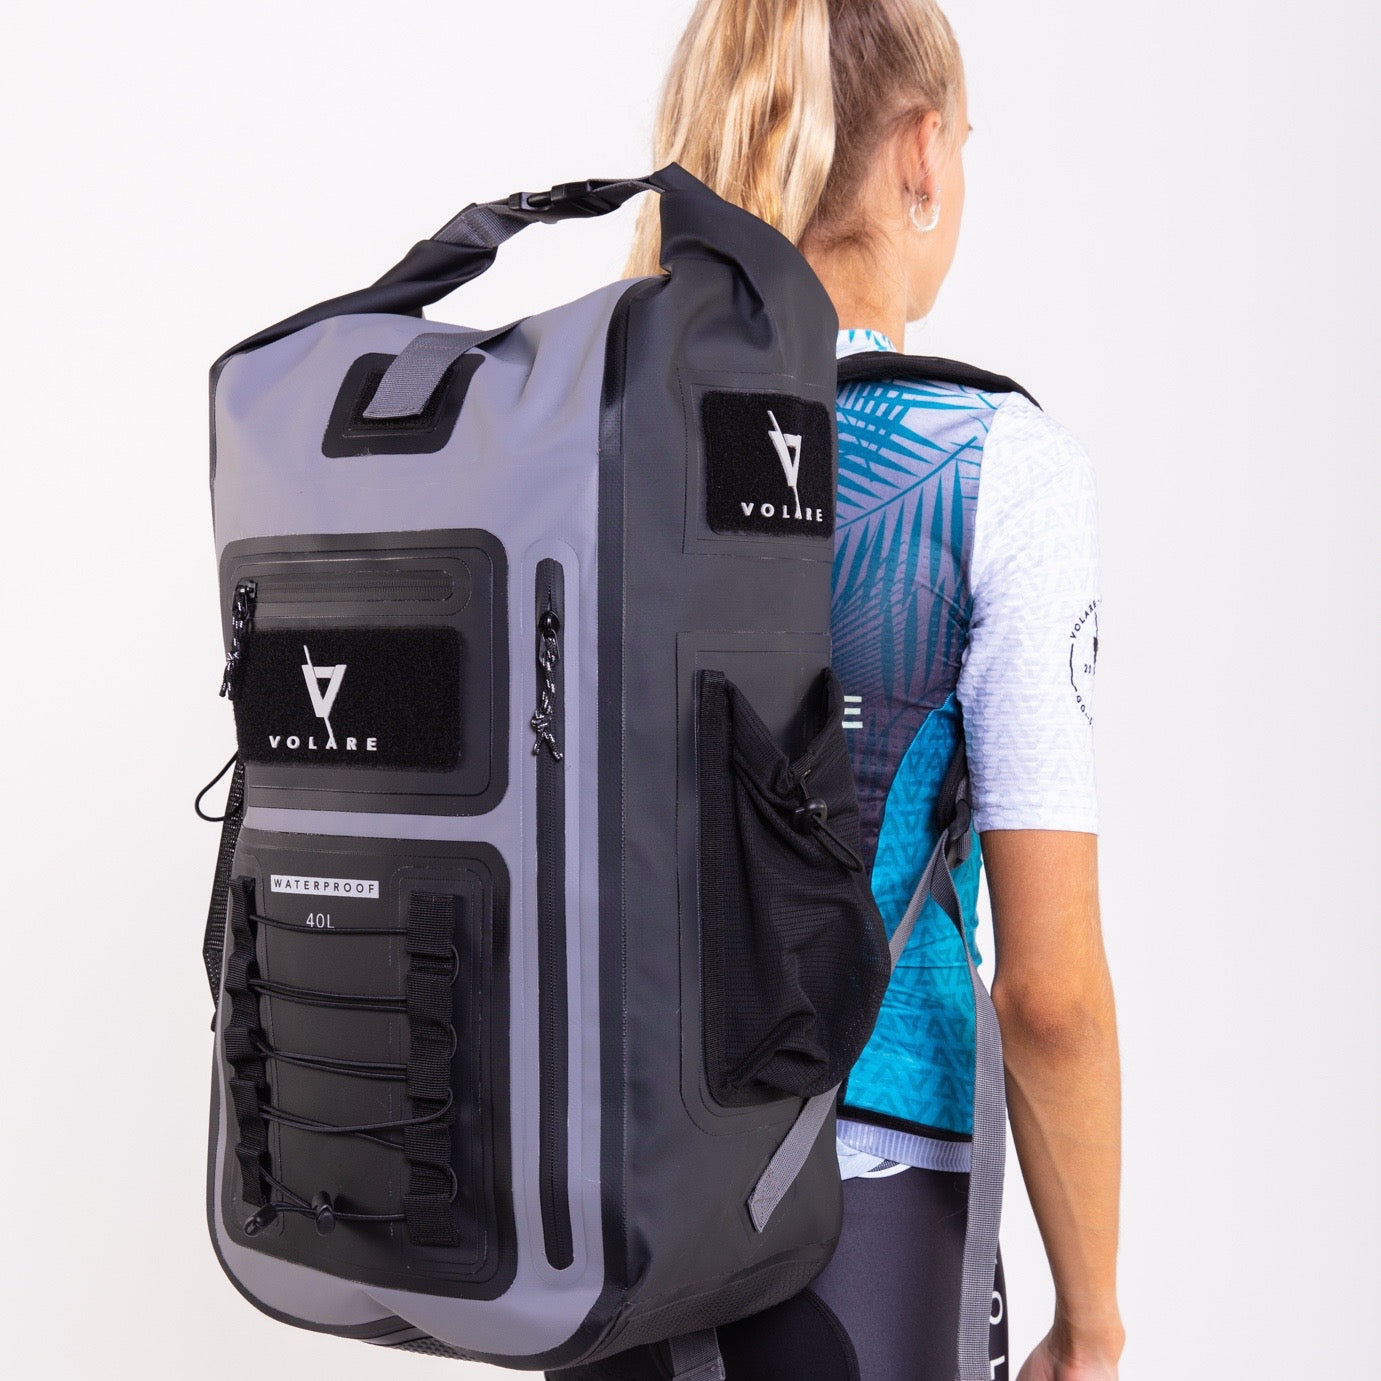 40 liter travel backpack